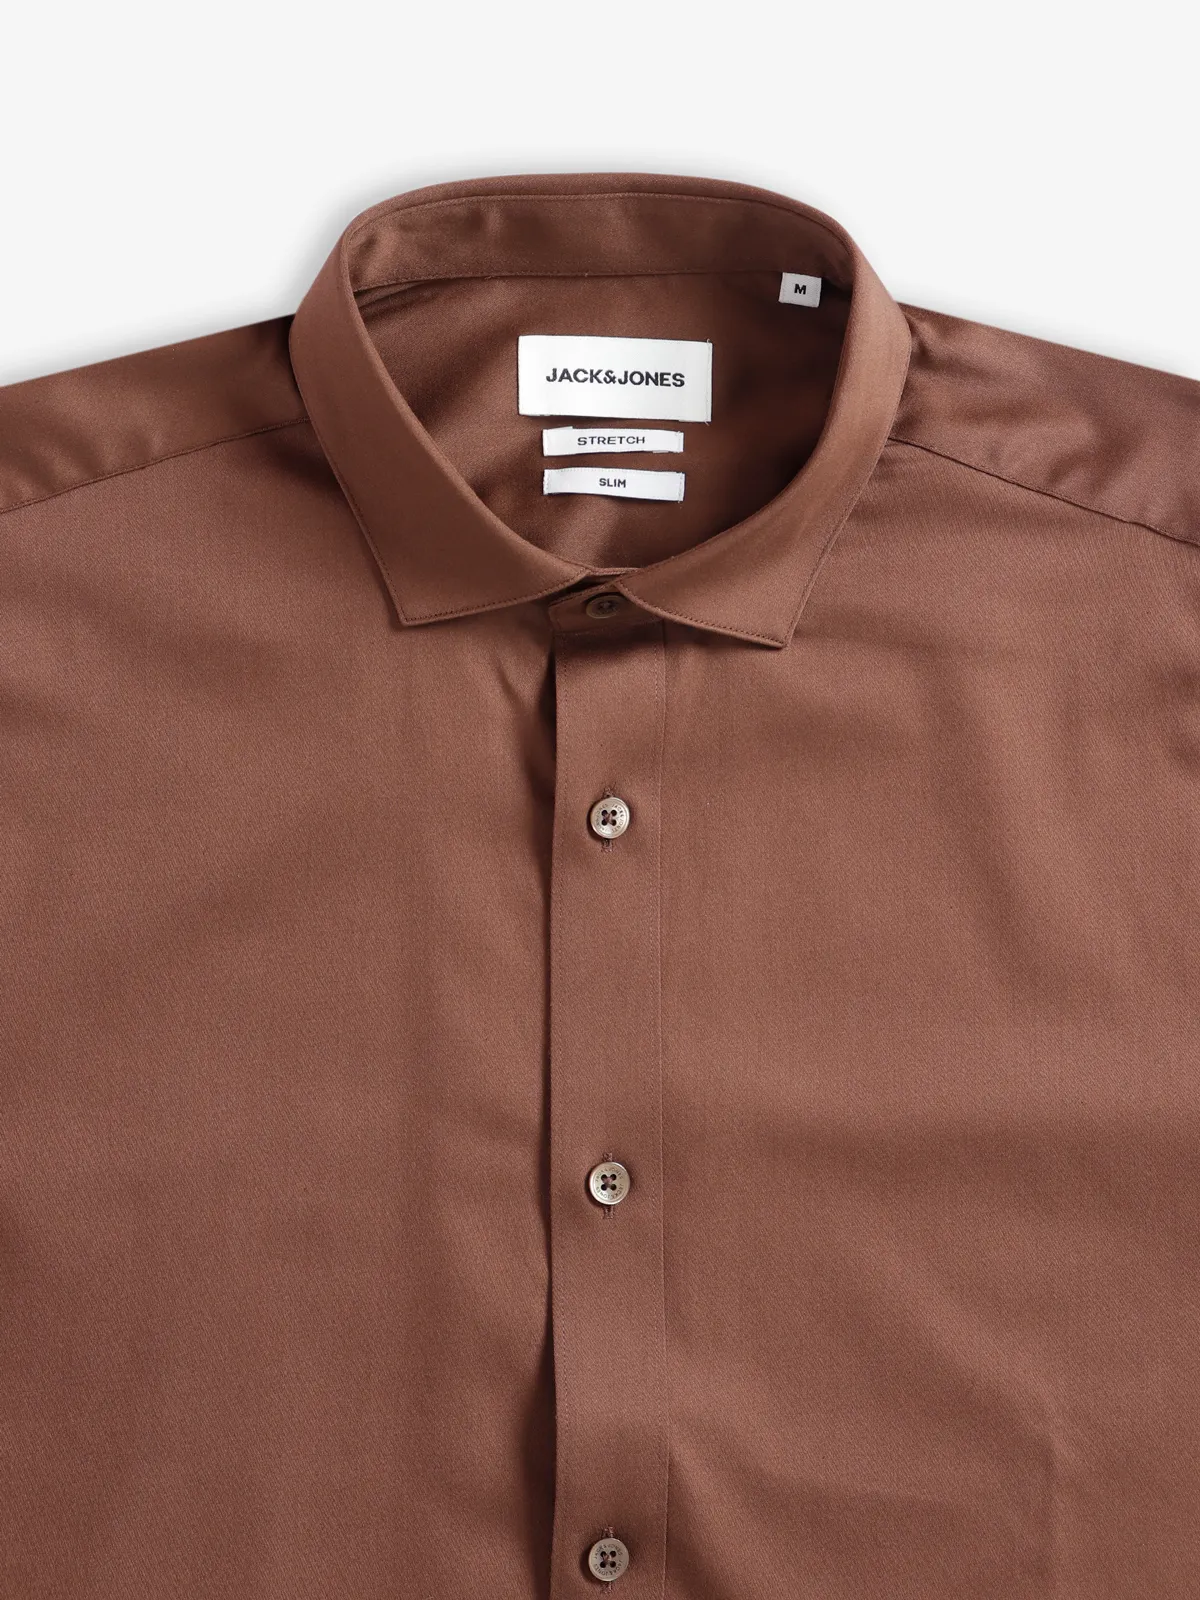 JACK&JONES cotton plain brown shirt